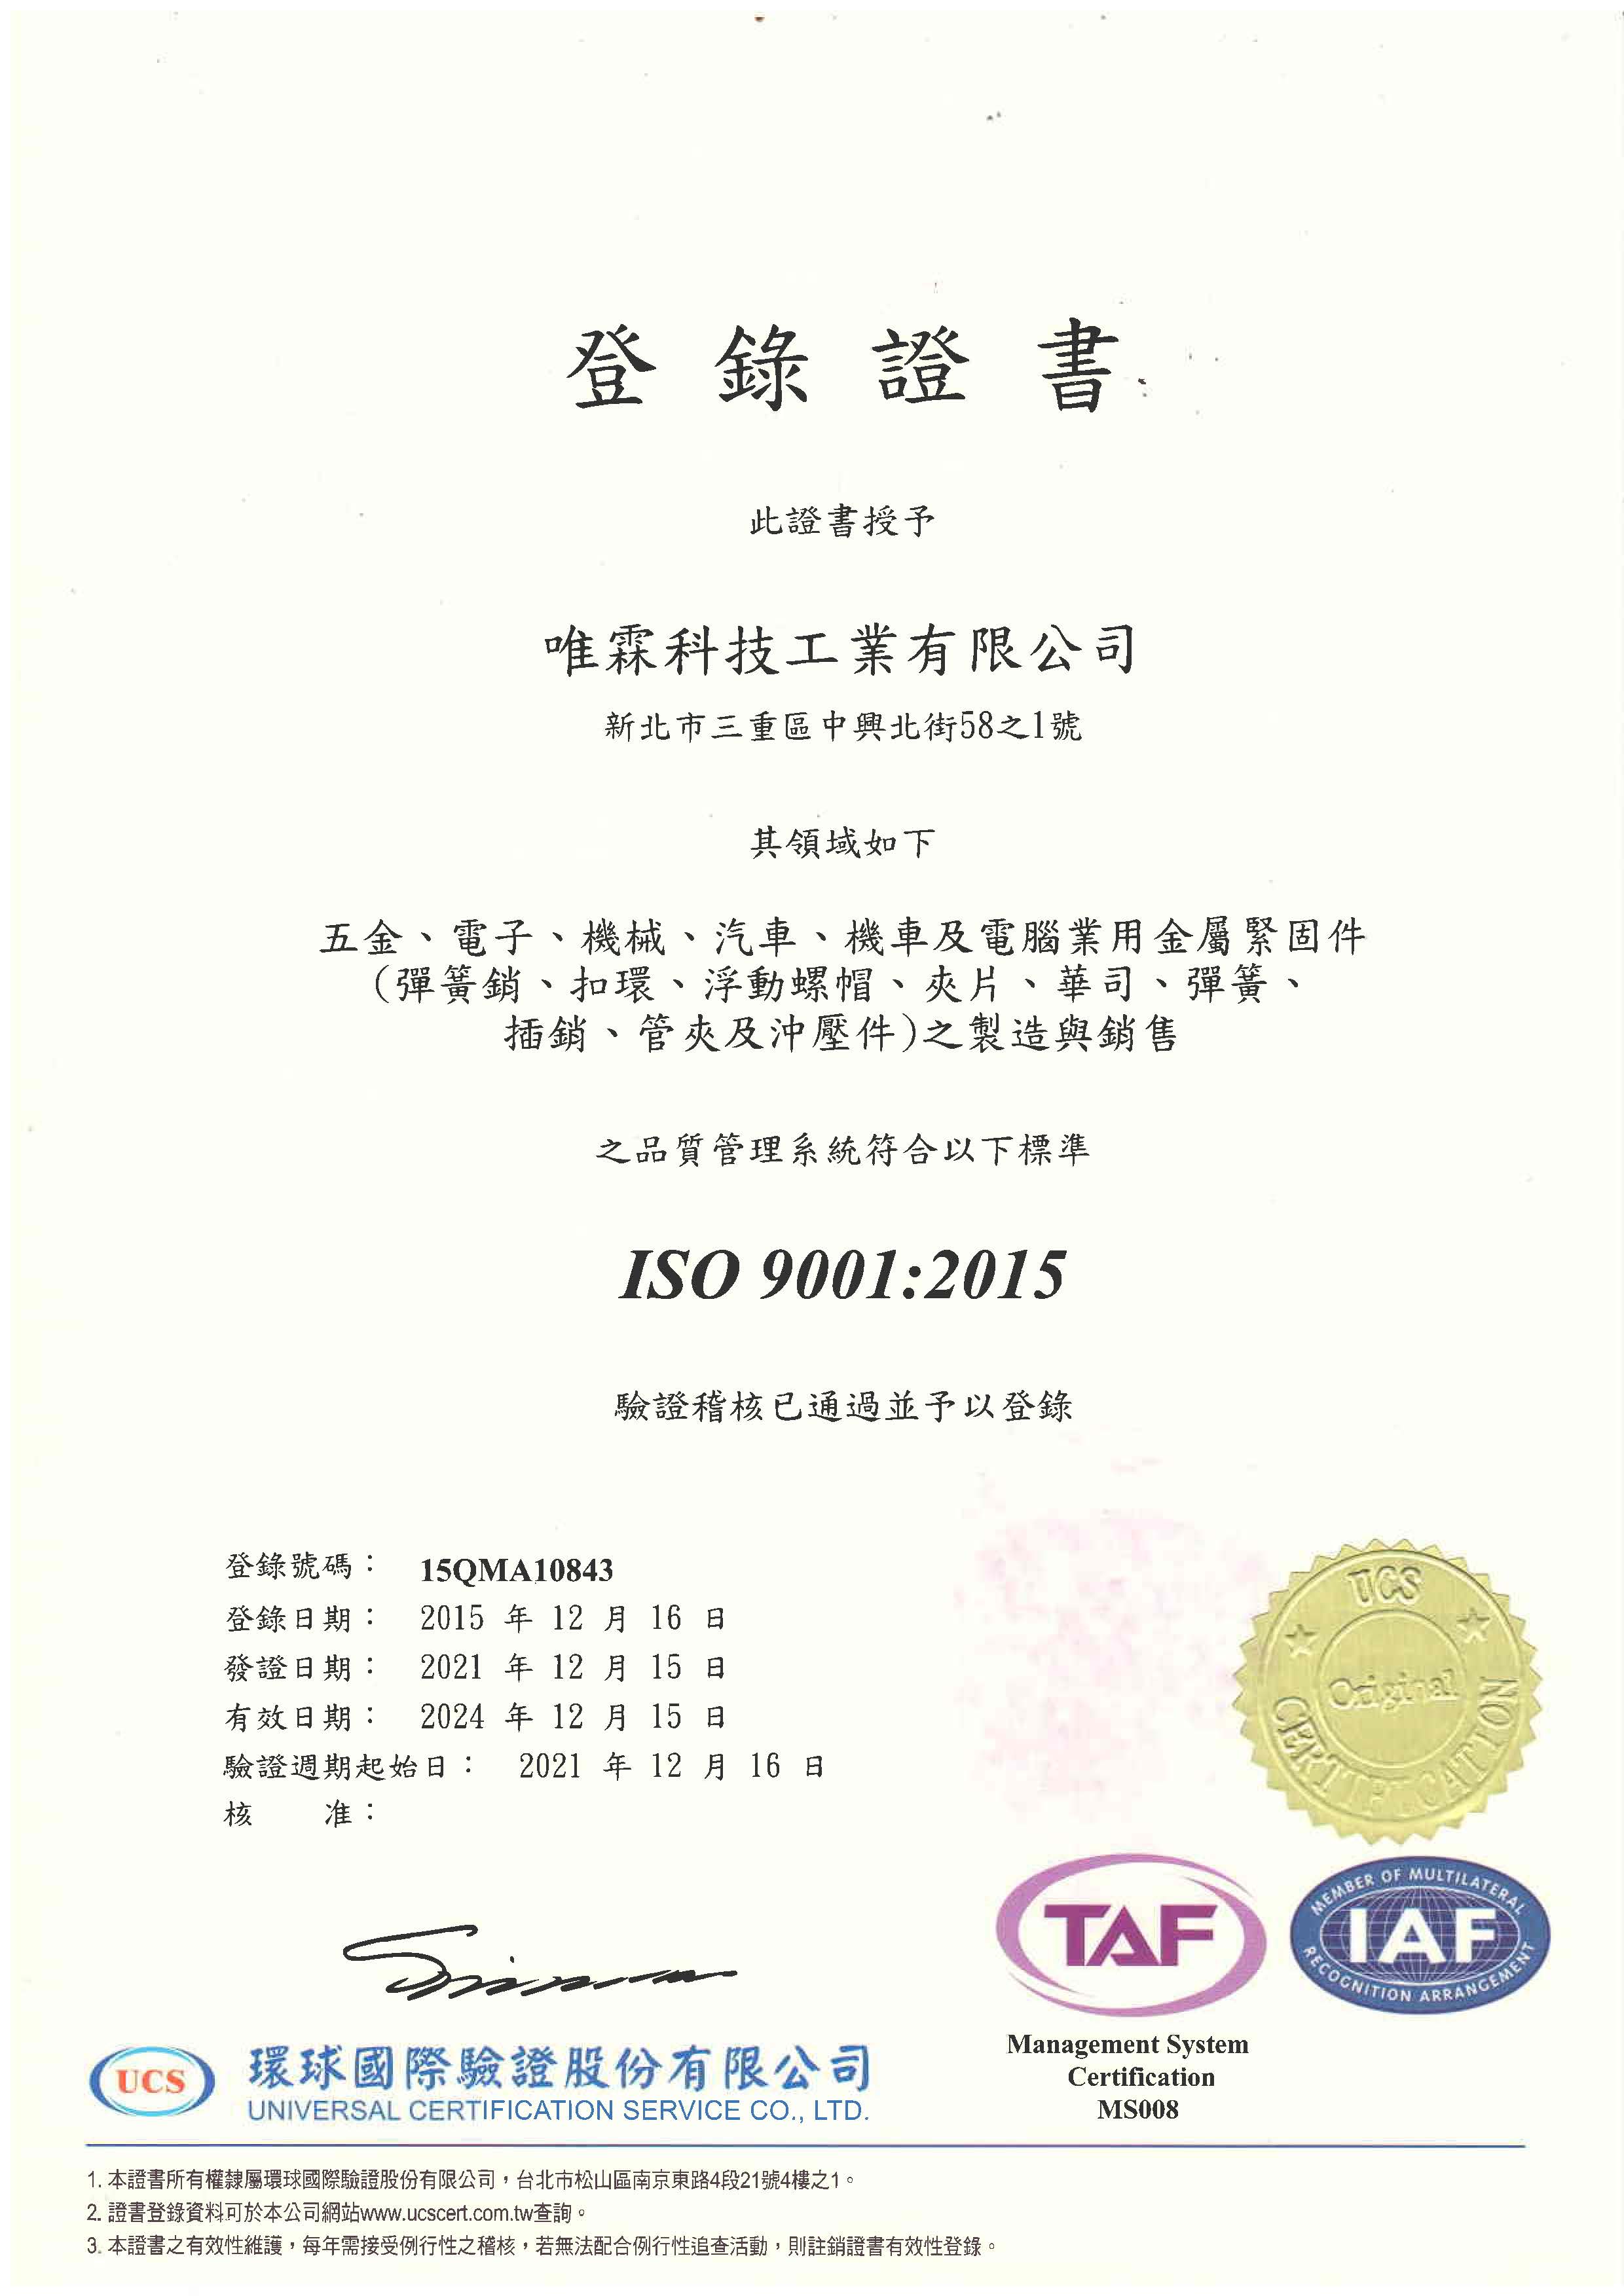 ISO 9001:2015 登錄證書